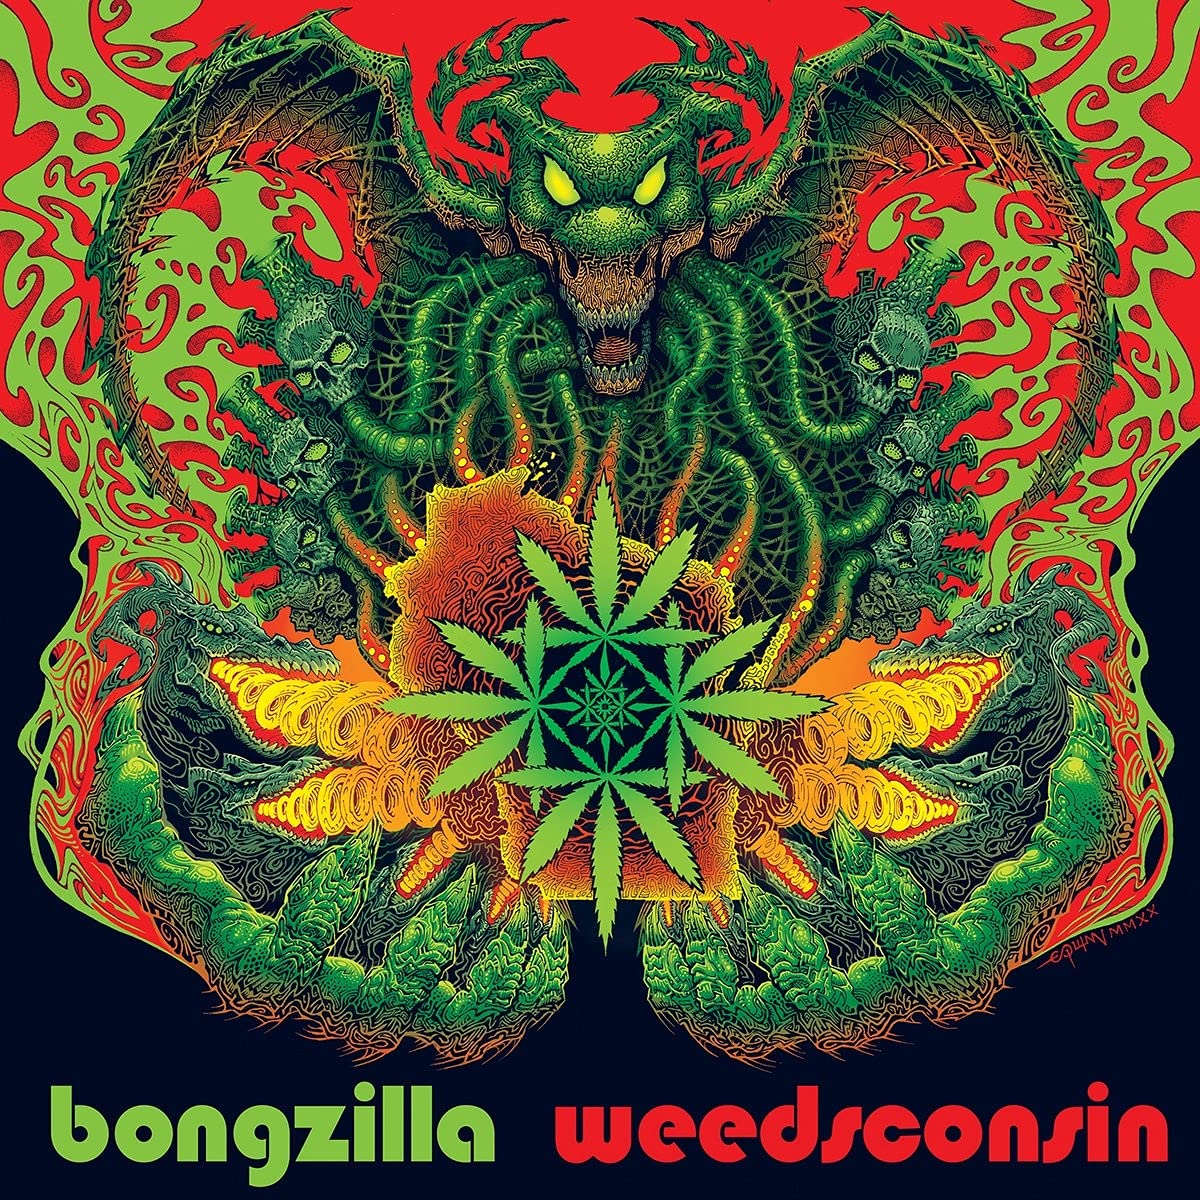 Bongzilla - Weedsconsin [Green & Red Vinyl]